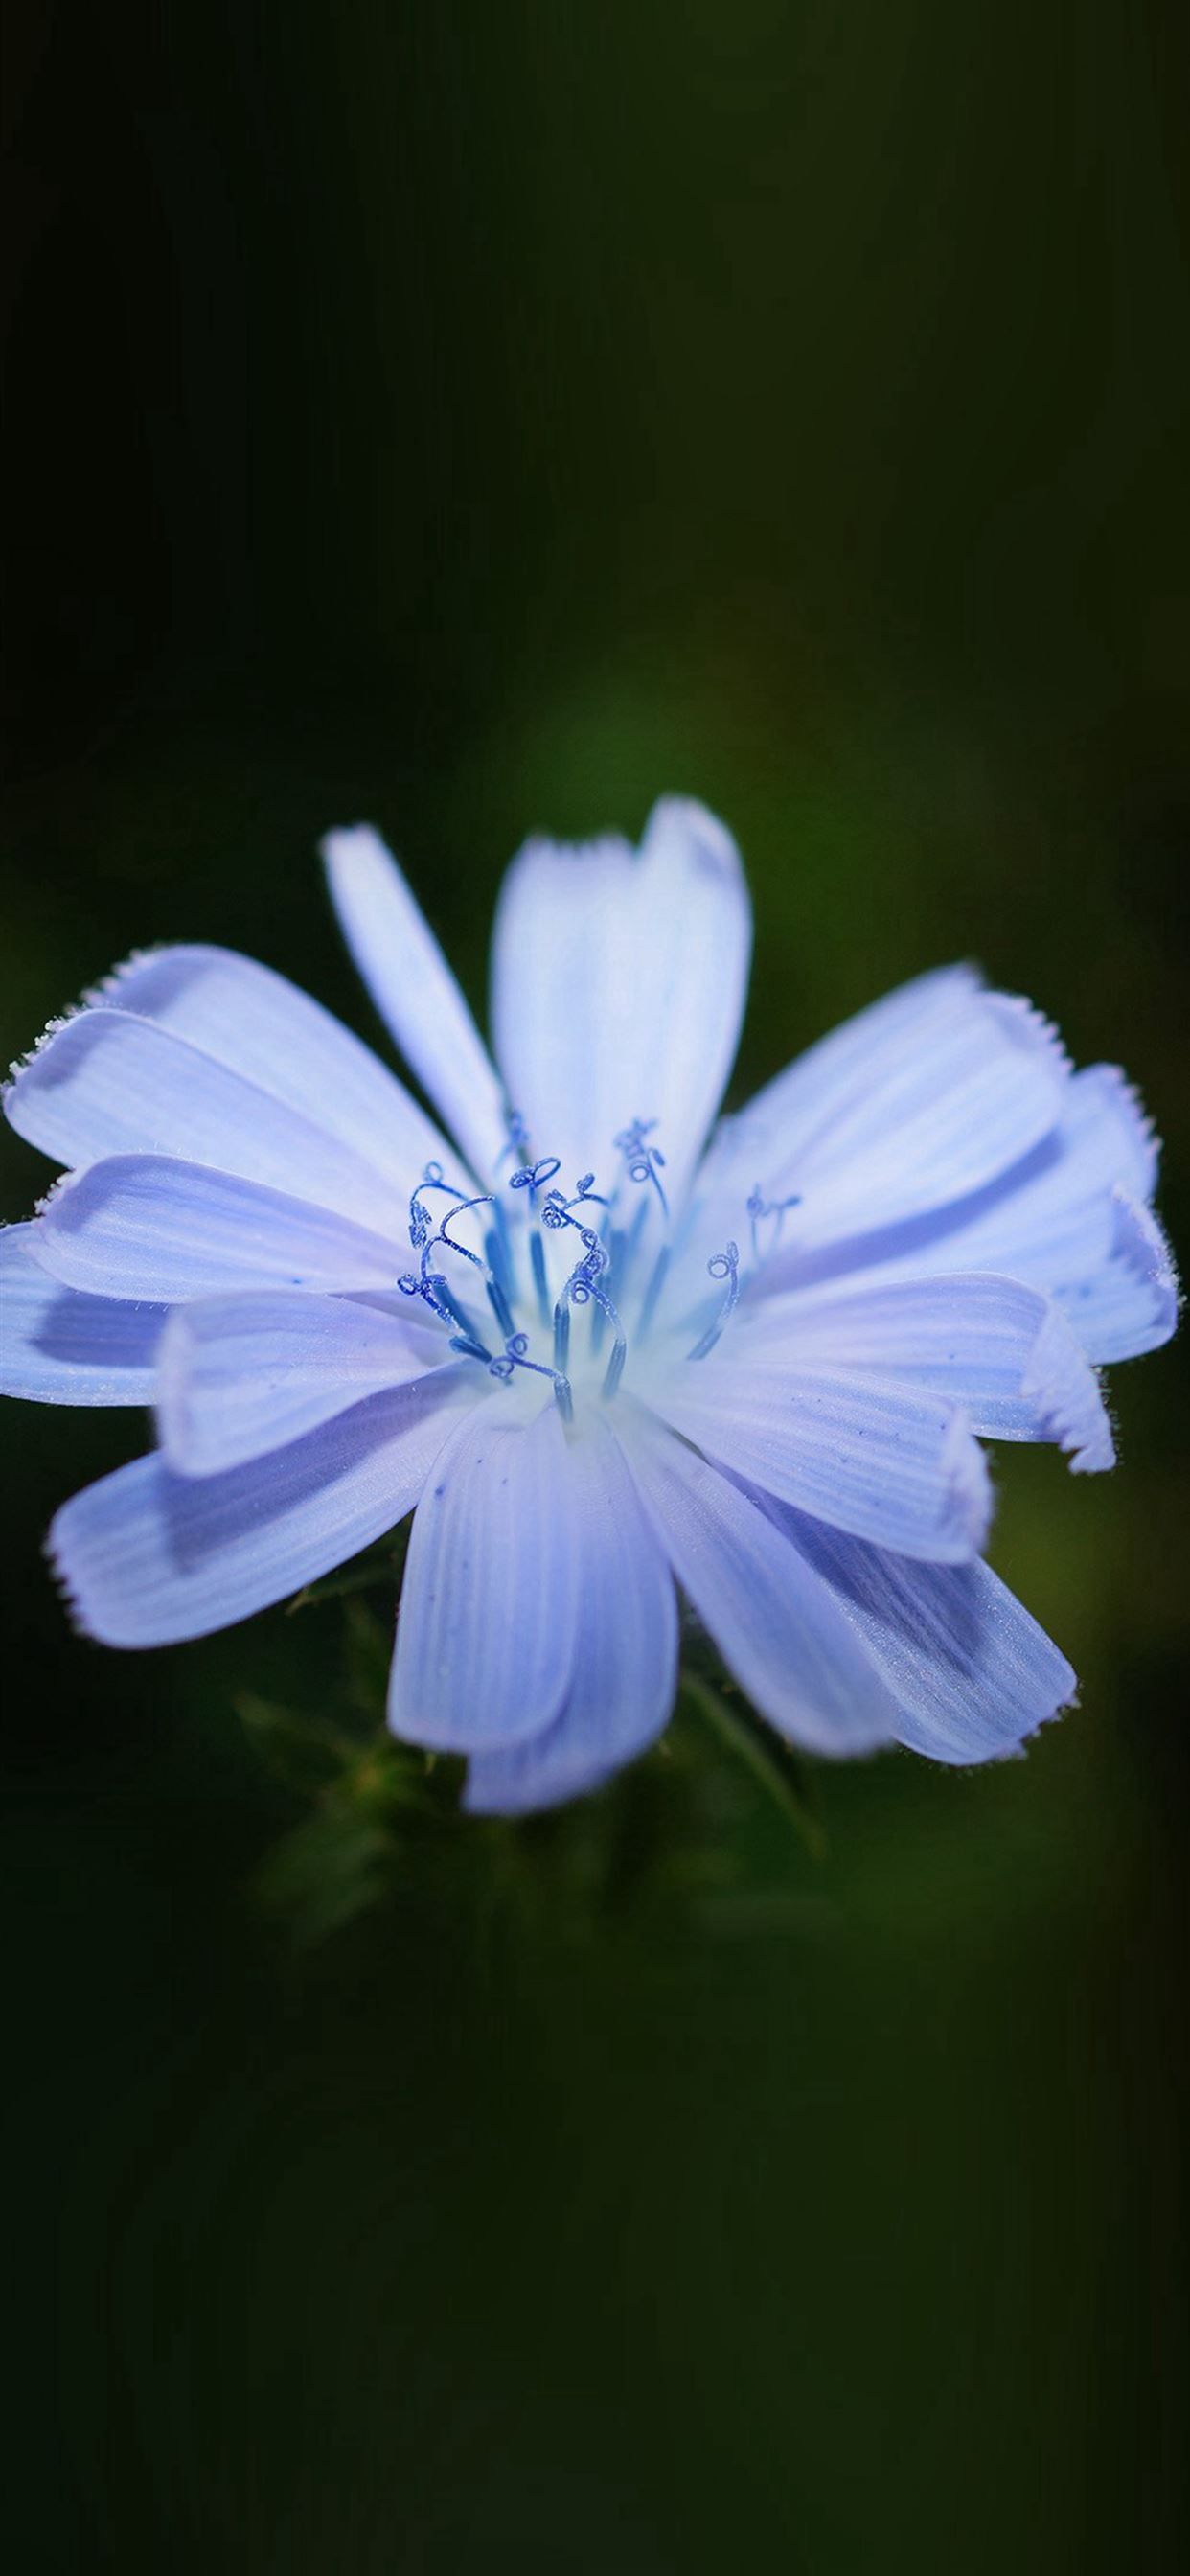 Flower Blue Spring New Llife Nature Dark iPhone X Wallpaper Free Download